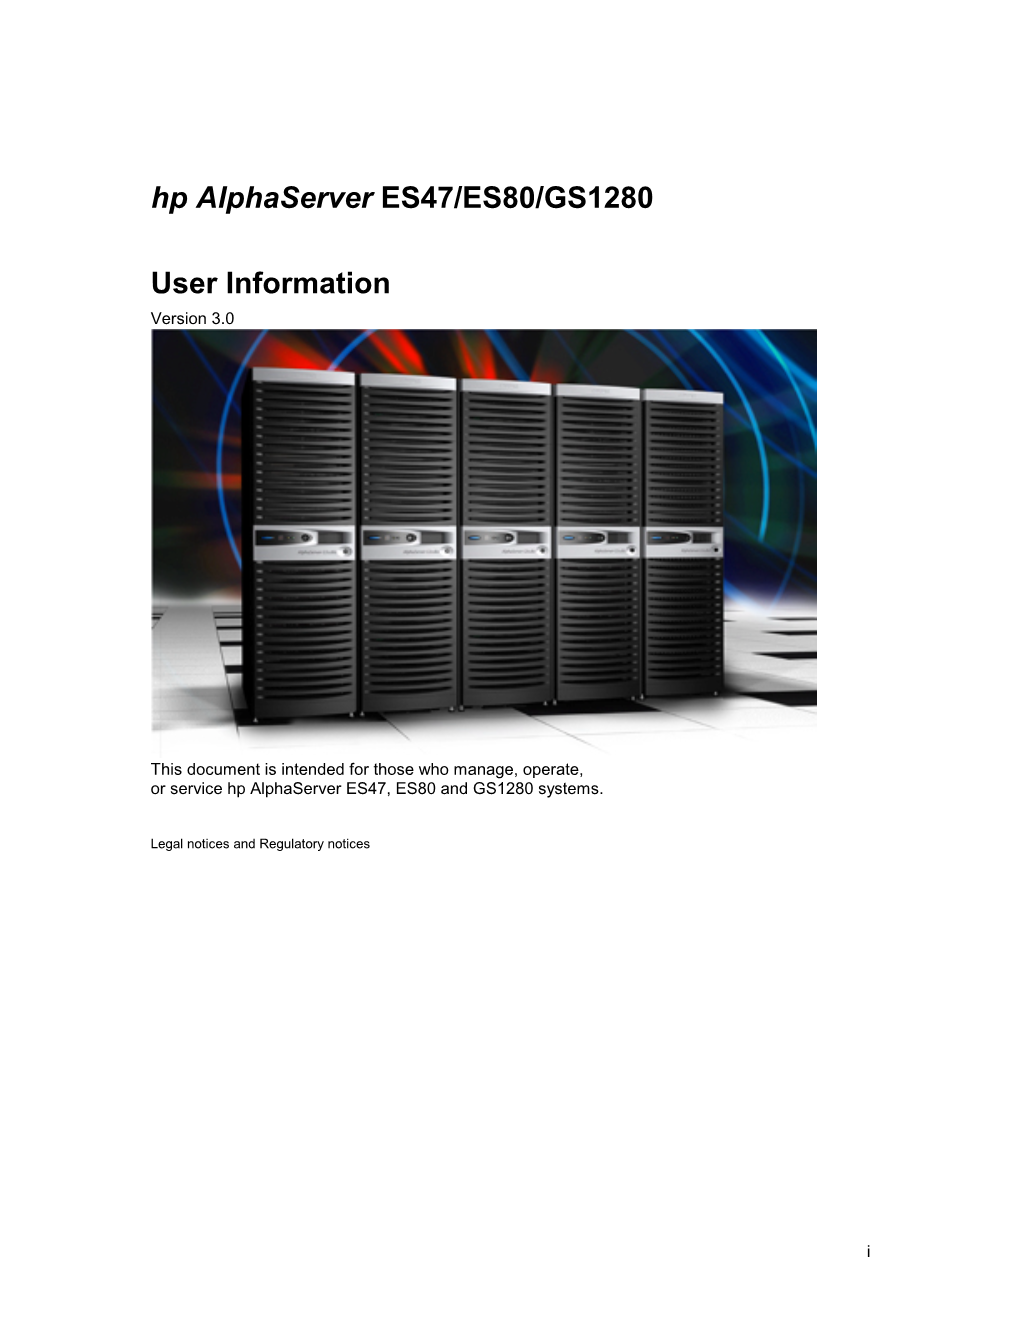 HP Alphaserver ES47 / ES80 / GS1280 User Information